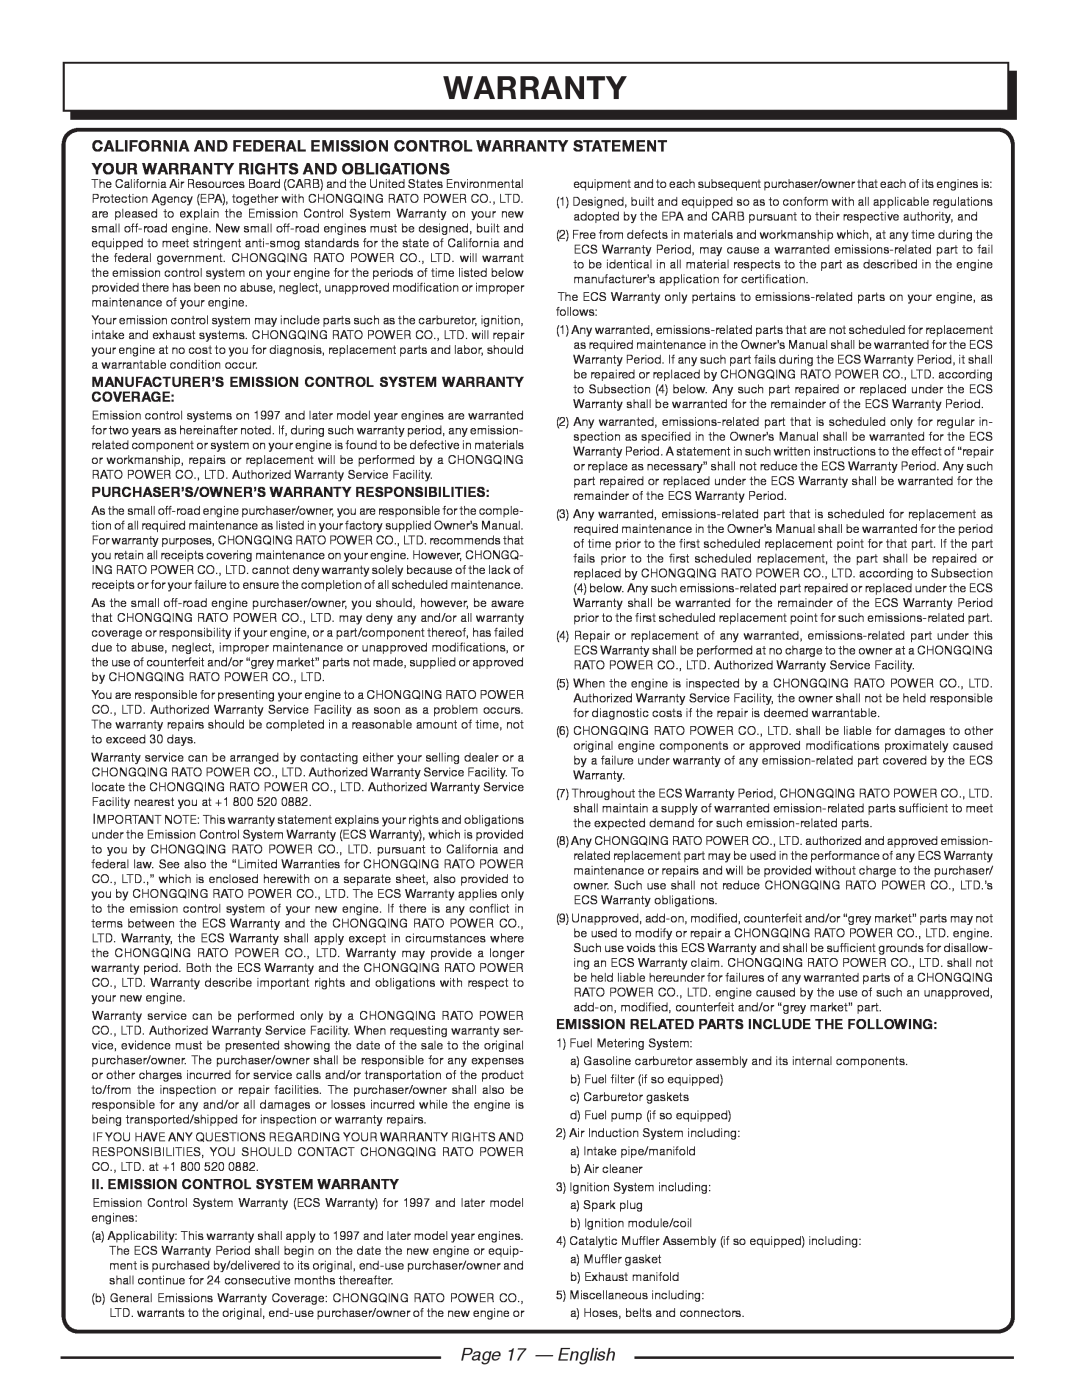 Homelite UT80522, UT80953 Page 17 - English, Manufacturer’S Emission Control System Warranty Coverage 